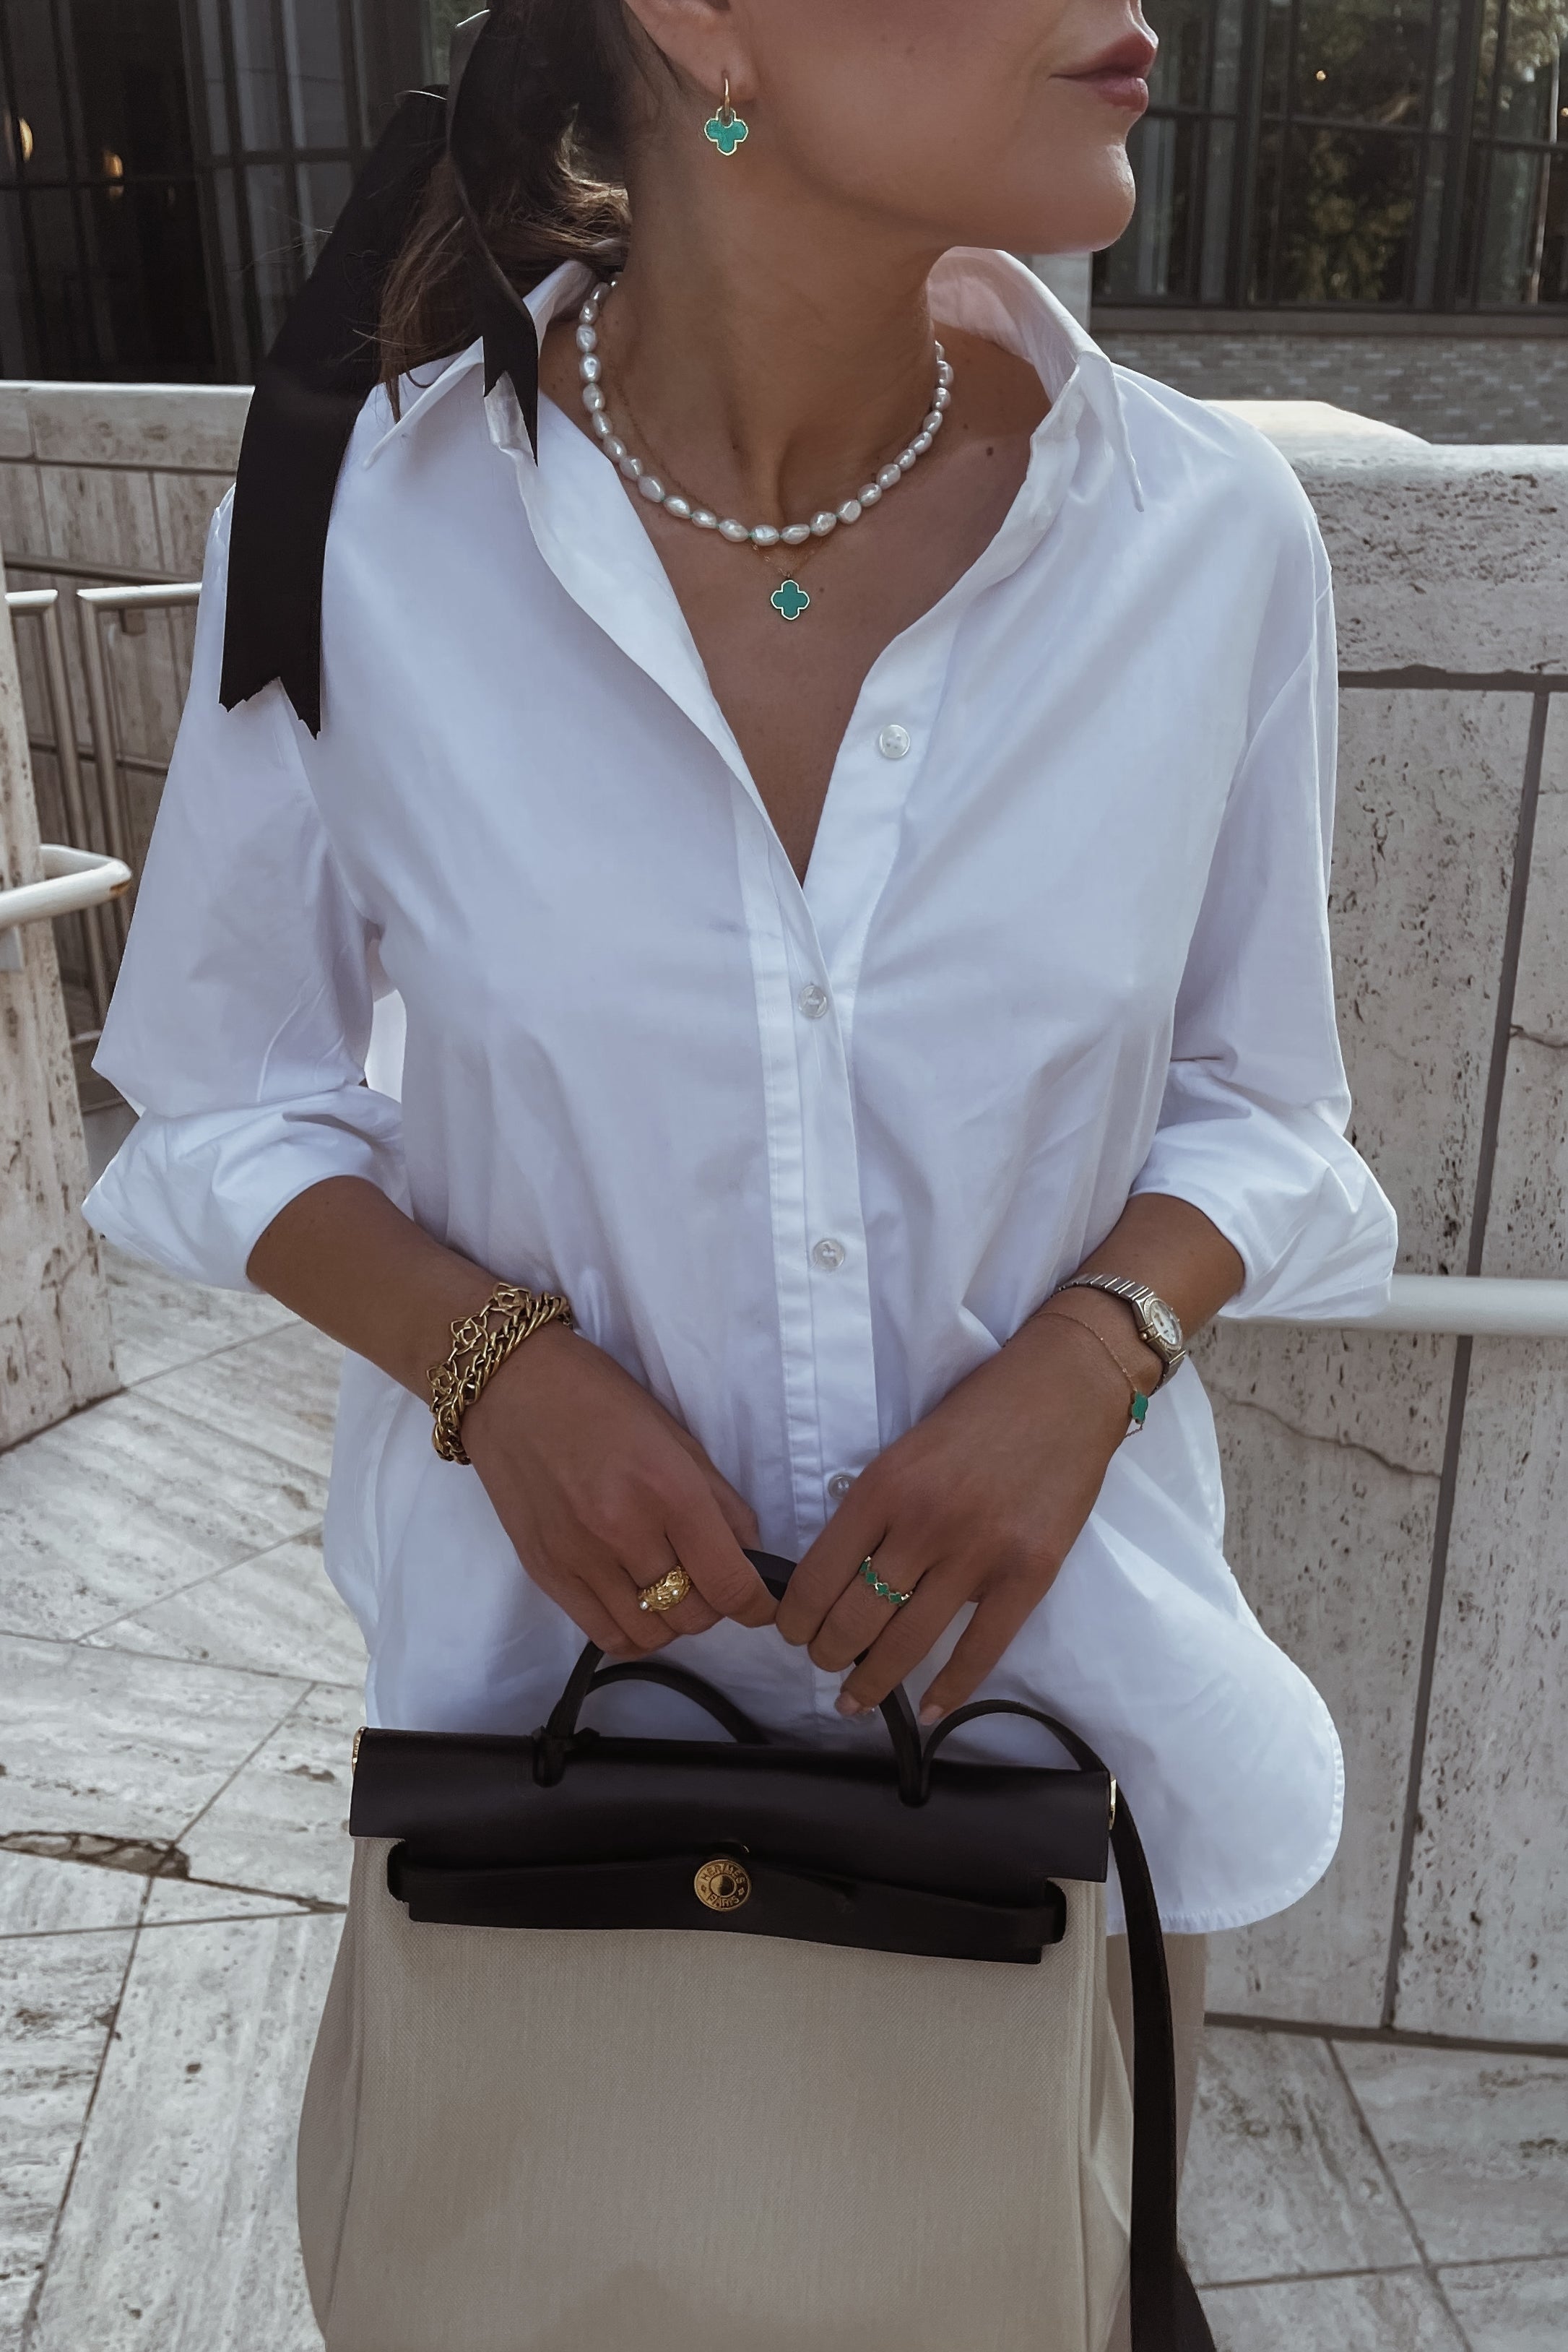 Winona Bracelet - Boutique Minimaliste has waterproof, durable, elegant and vintage inspired jewelry